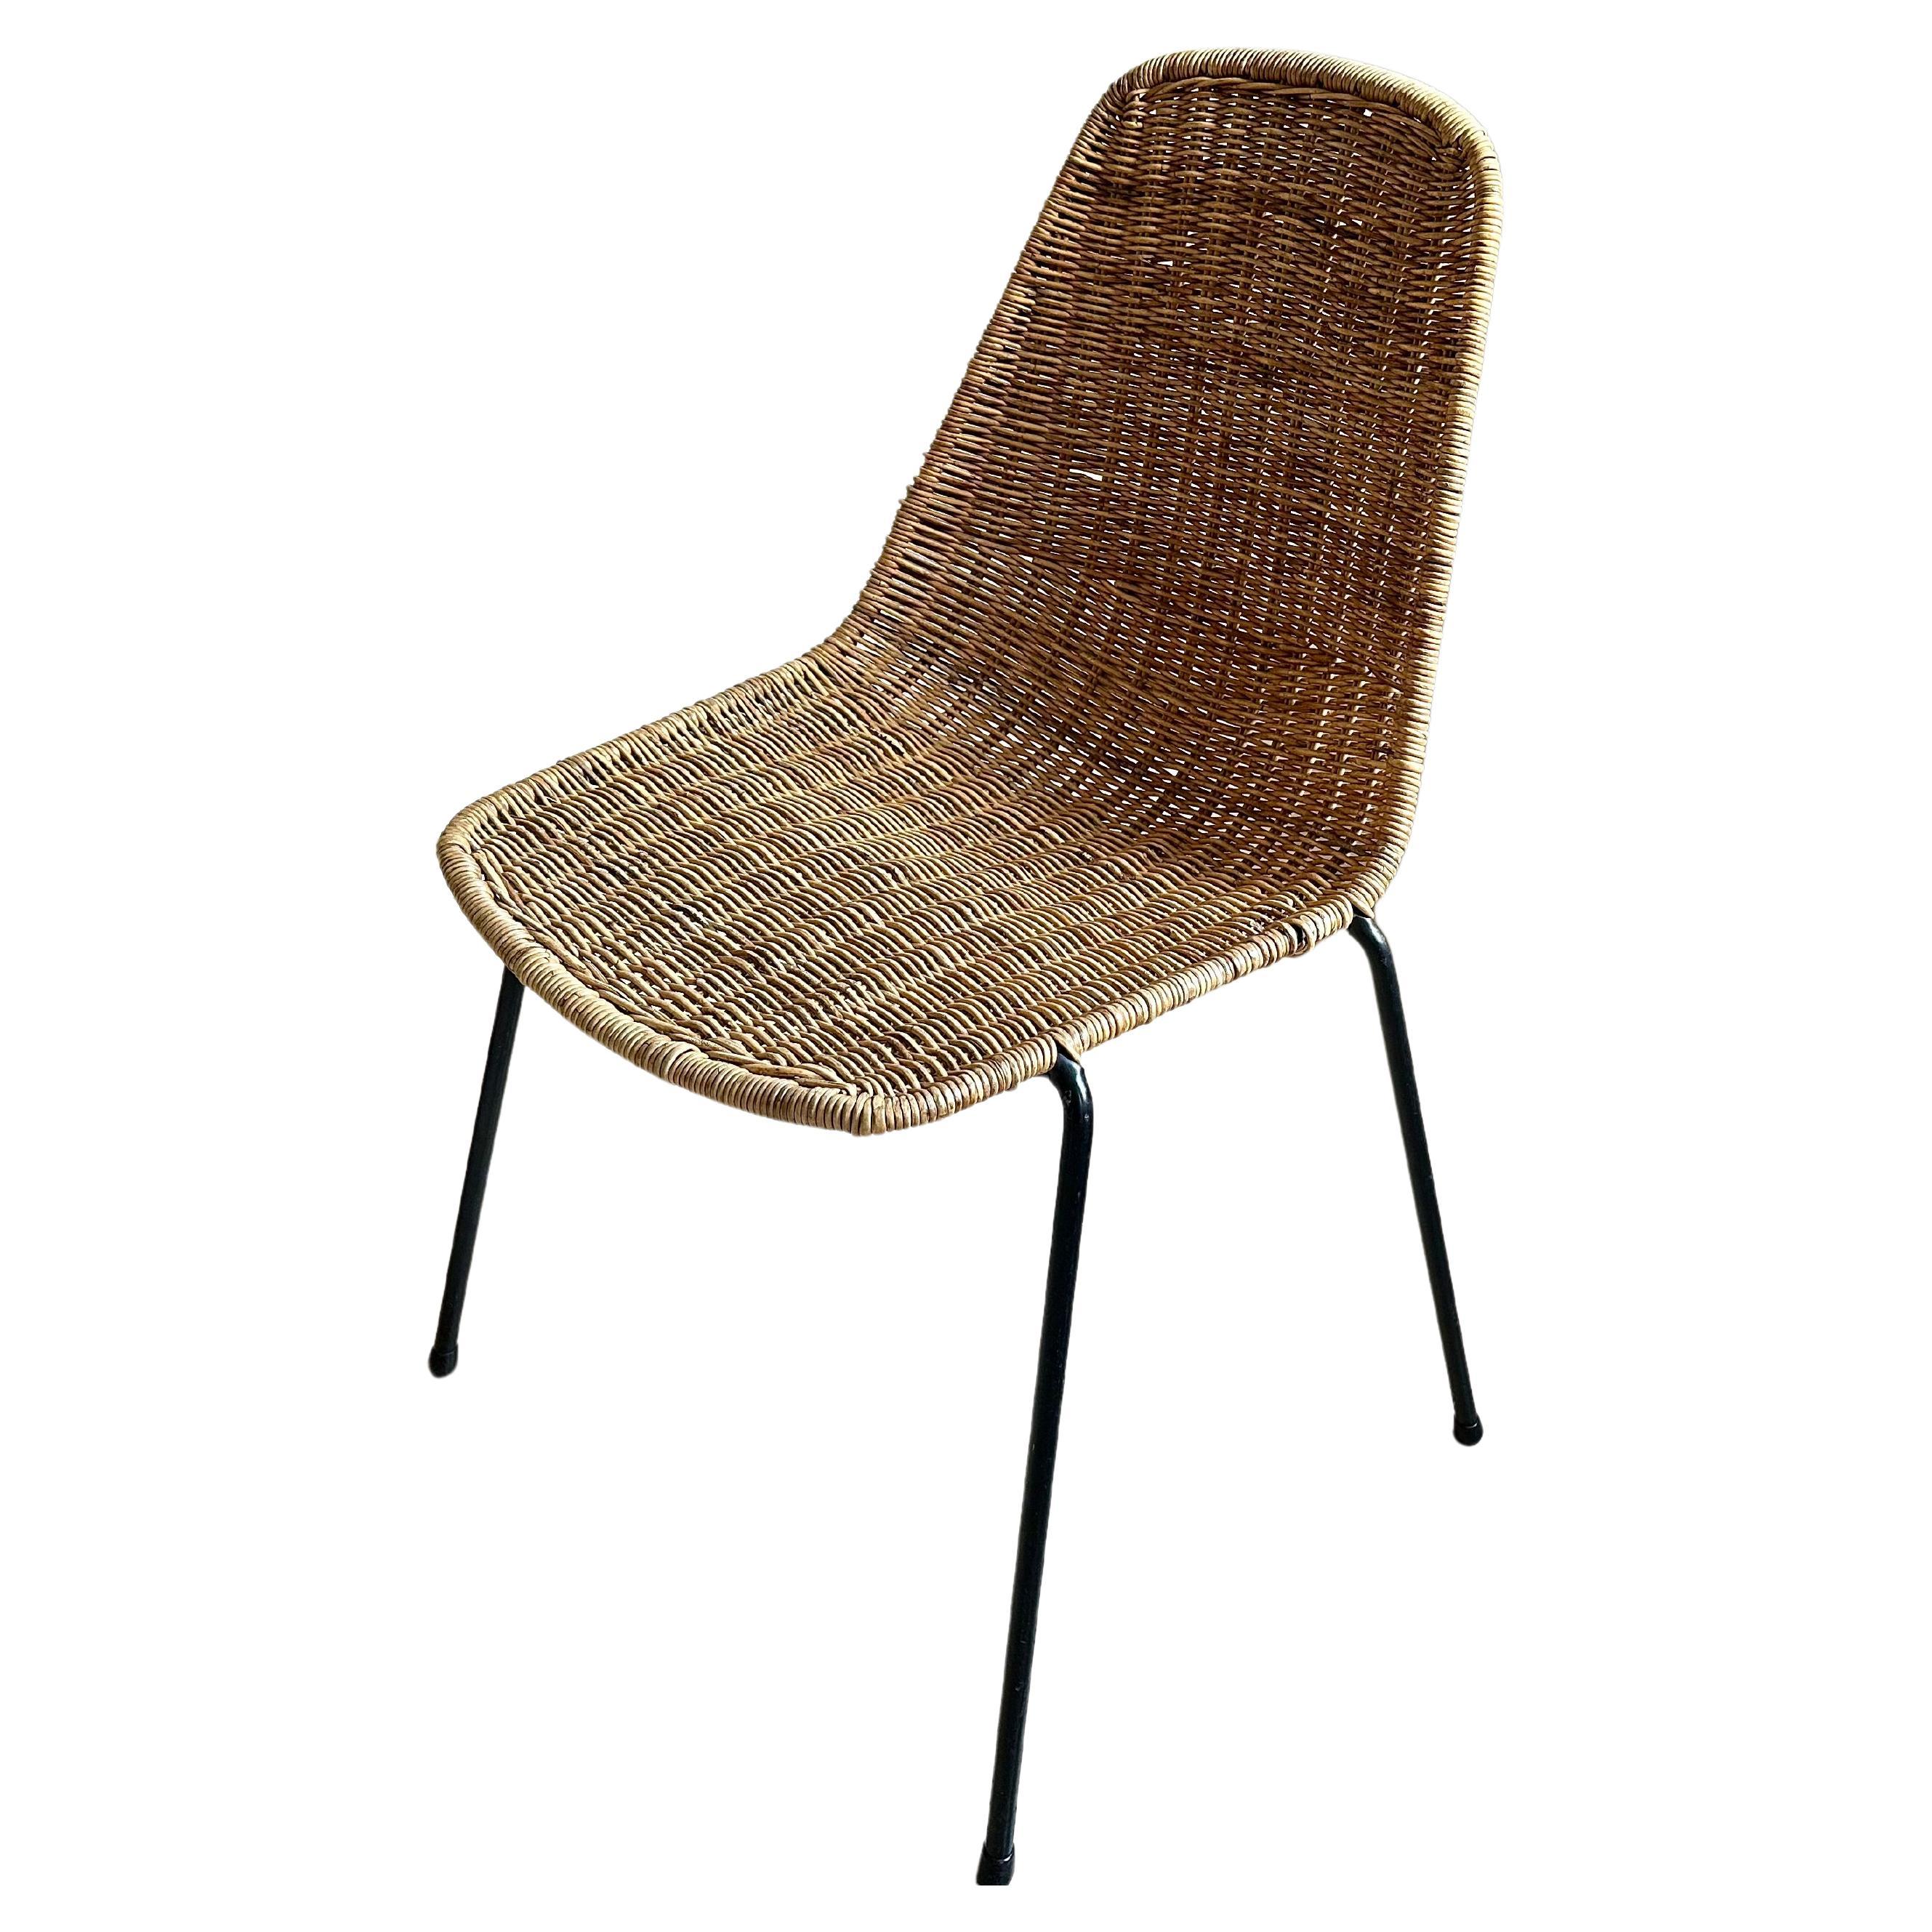 Elegance Timeless : La chaise panier Boho en rotin de Gian Franco Legler